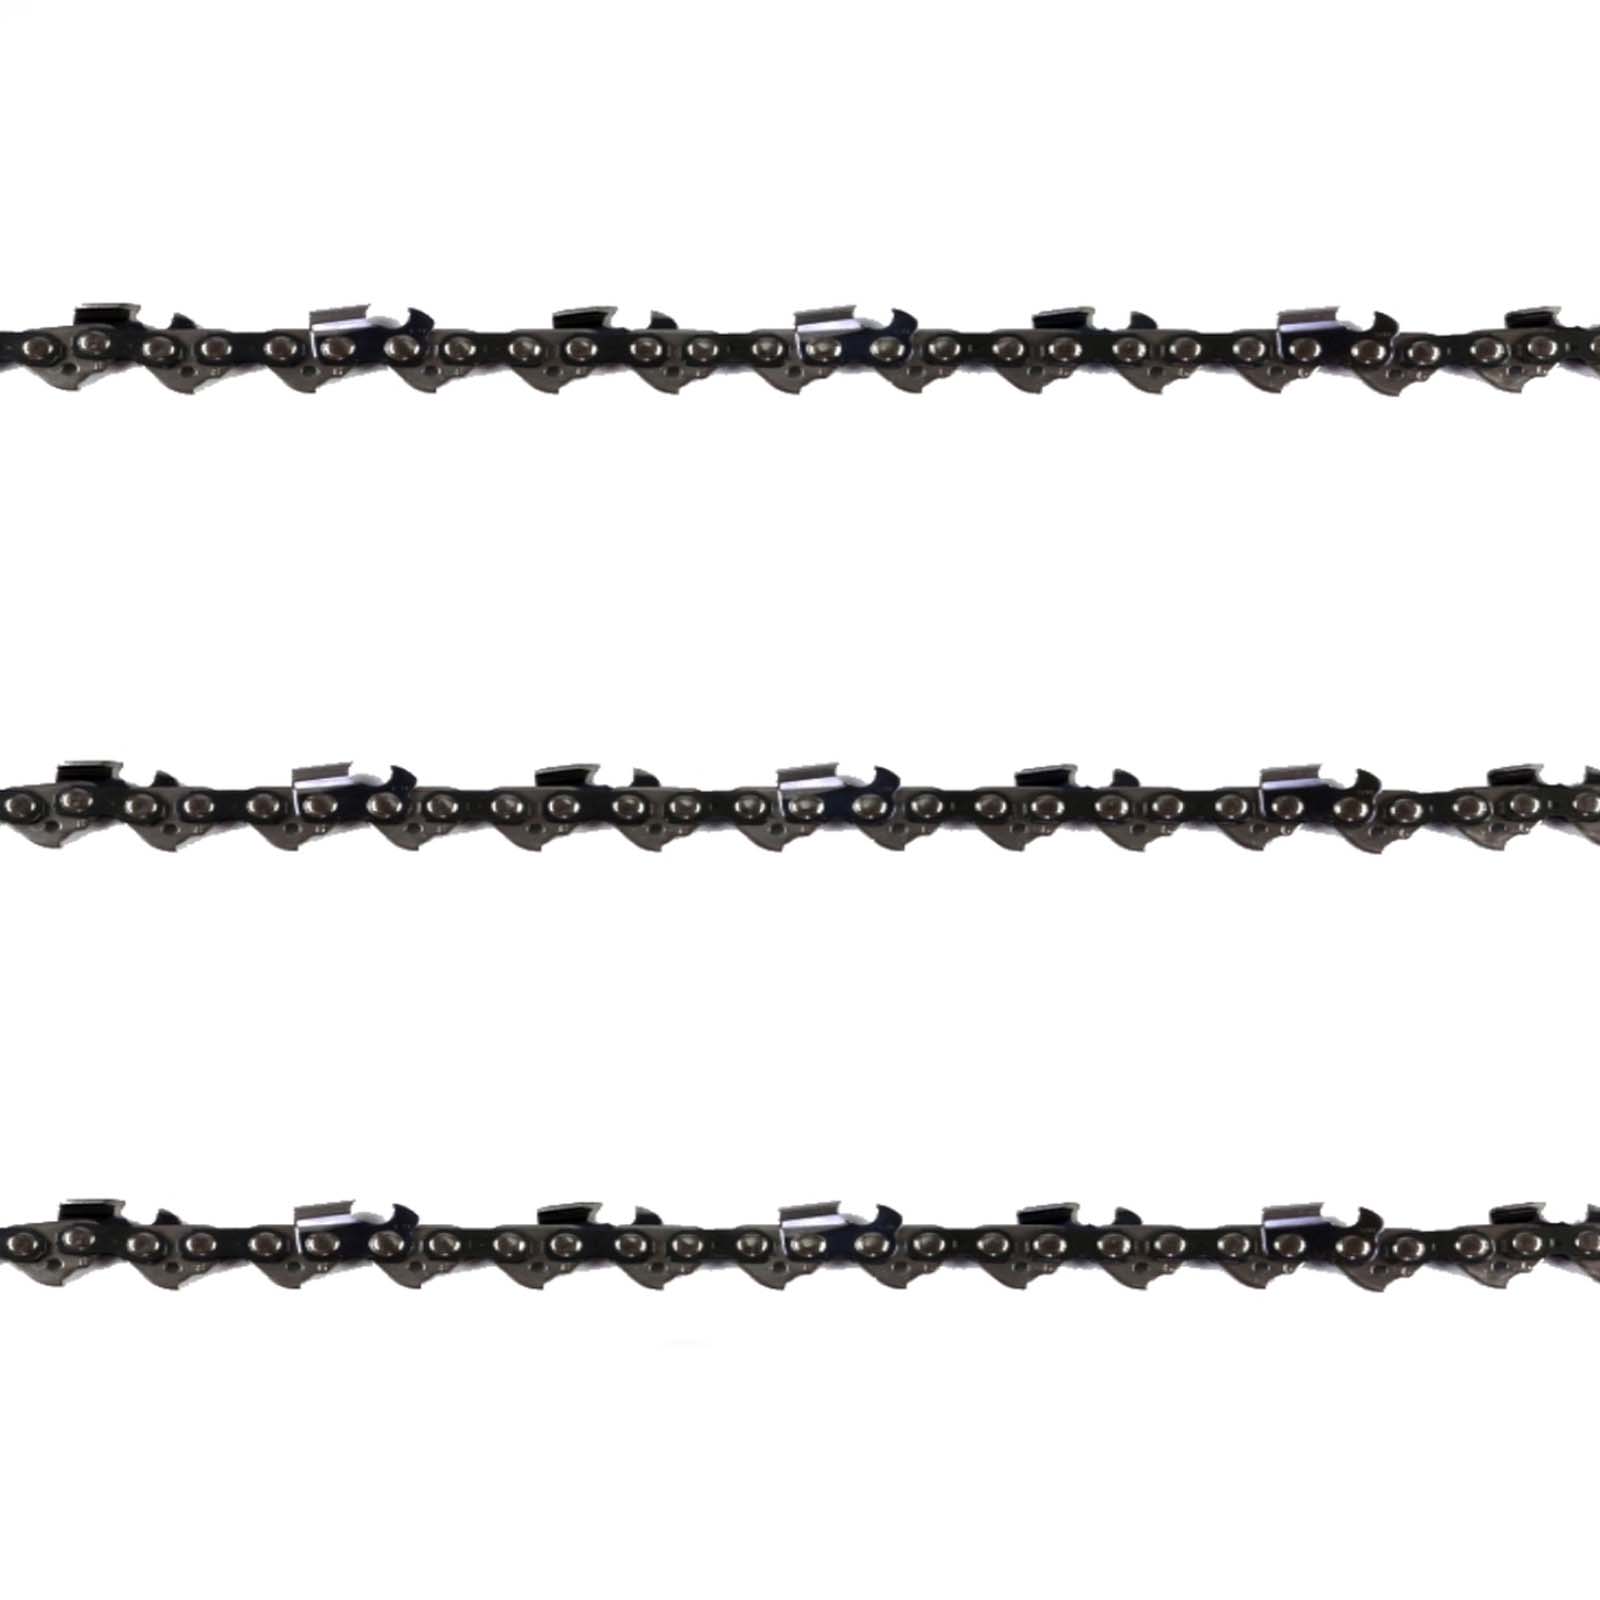 1x Chainsaw Semi Chisel Chains 3/8LP 043 52DL for Makita 14" Bar UC3520A UC3530A